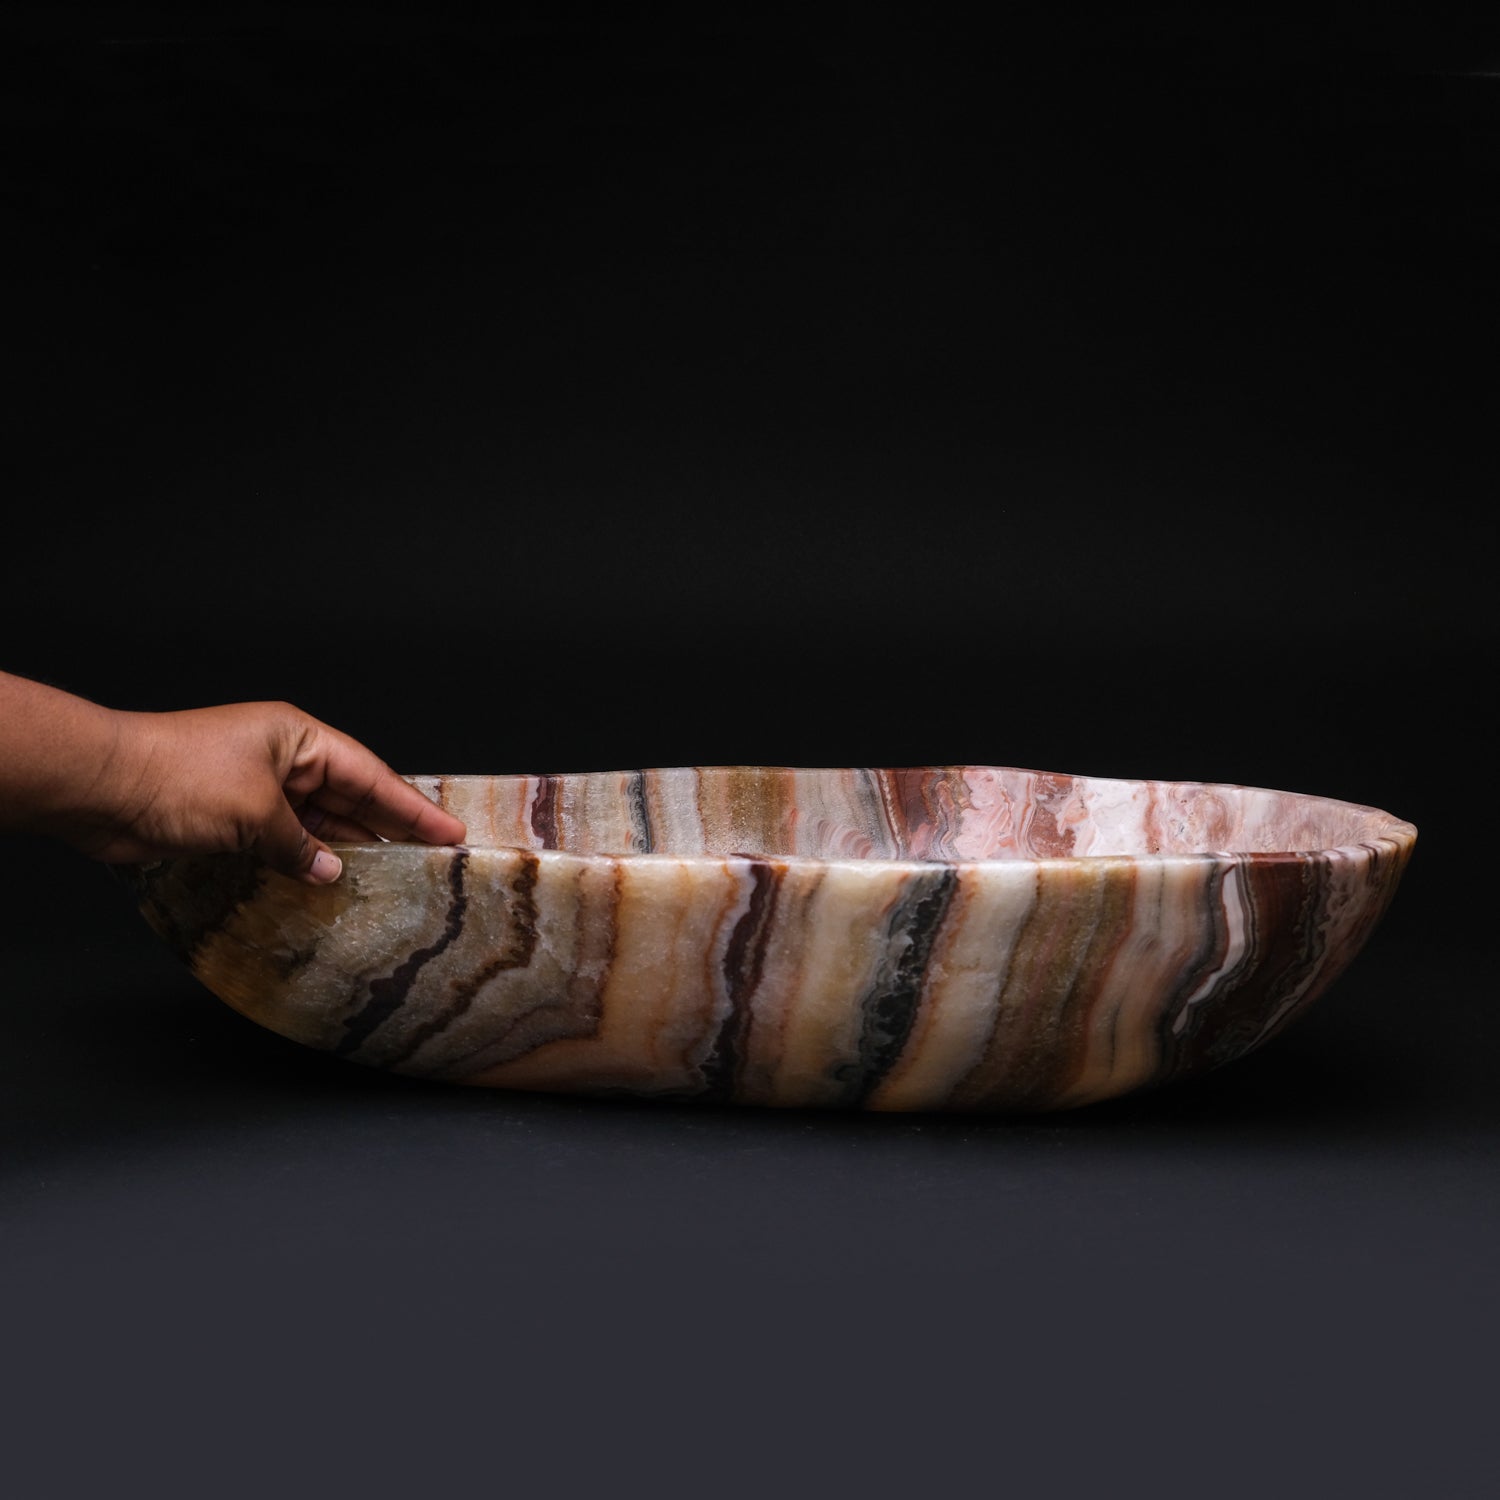 Large Polished Rainbow Onyx Canoe Bowl from Mexico (19.2 lbs)